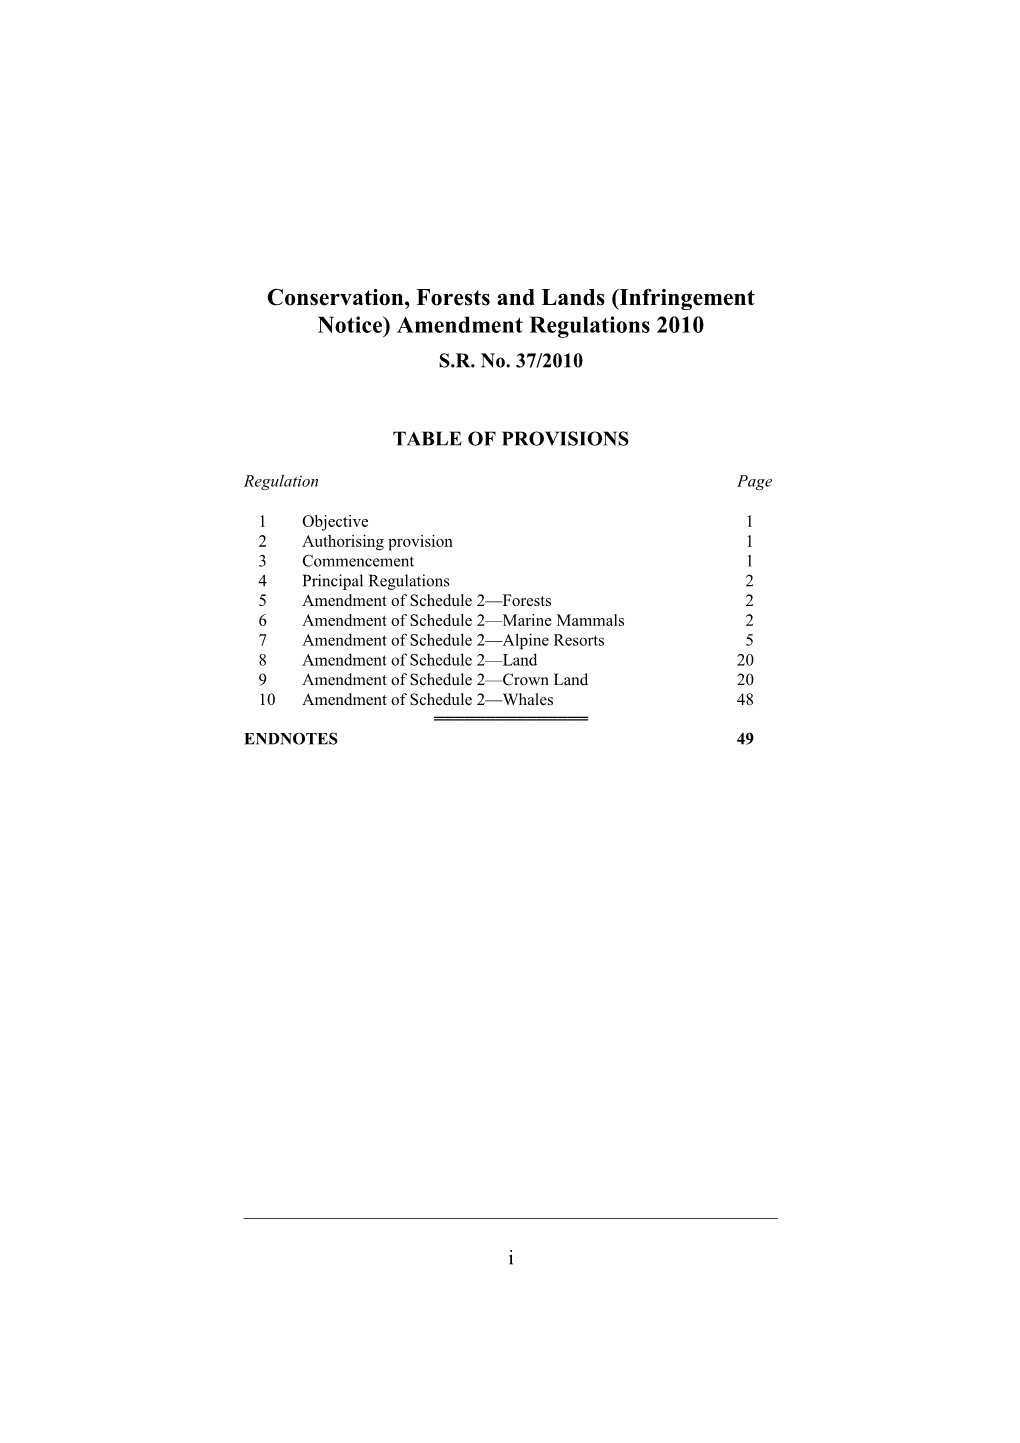 Conservation, Forests and Lands (Infringement Notice) Amendment Regulations 2010